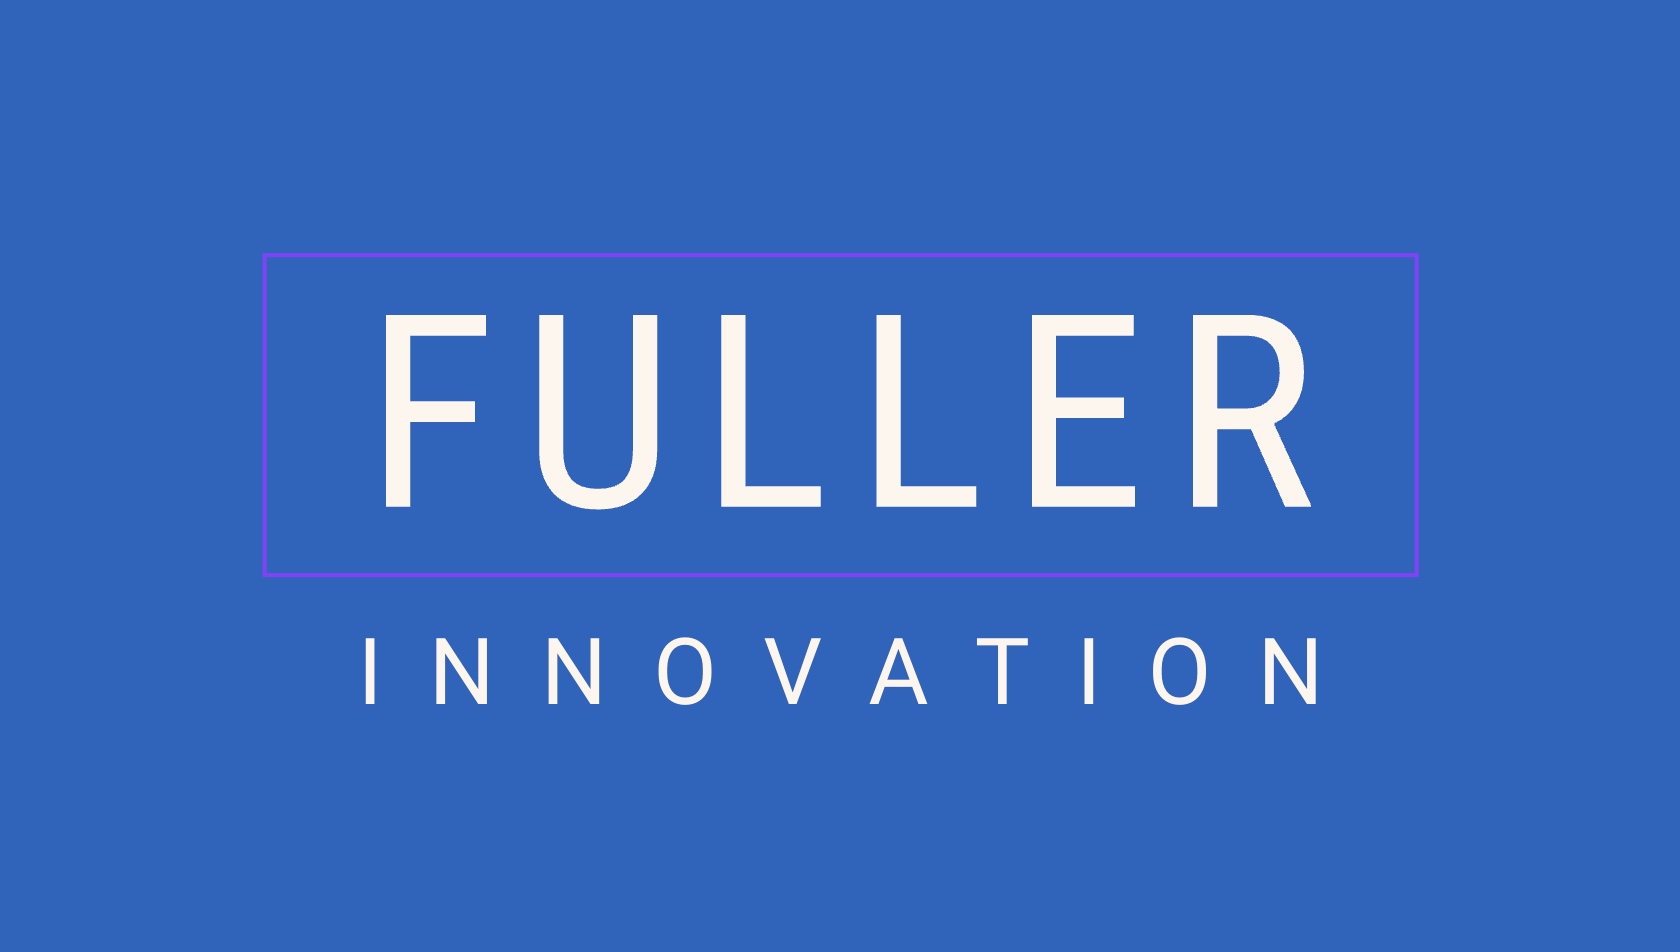 Fuller Innovation"